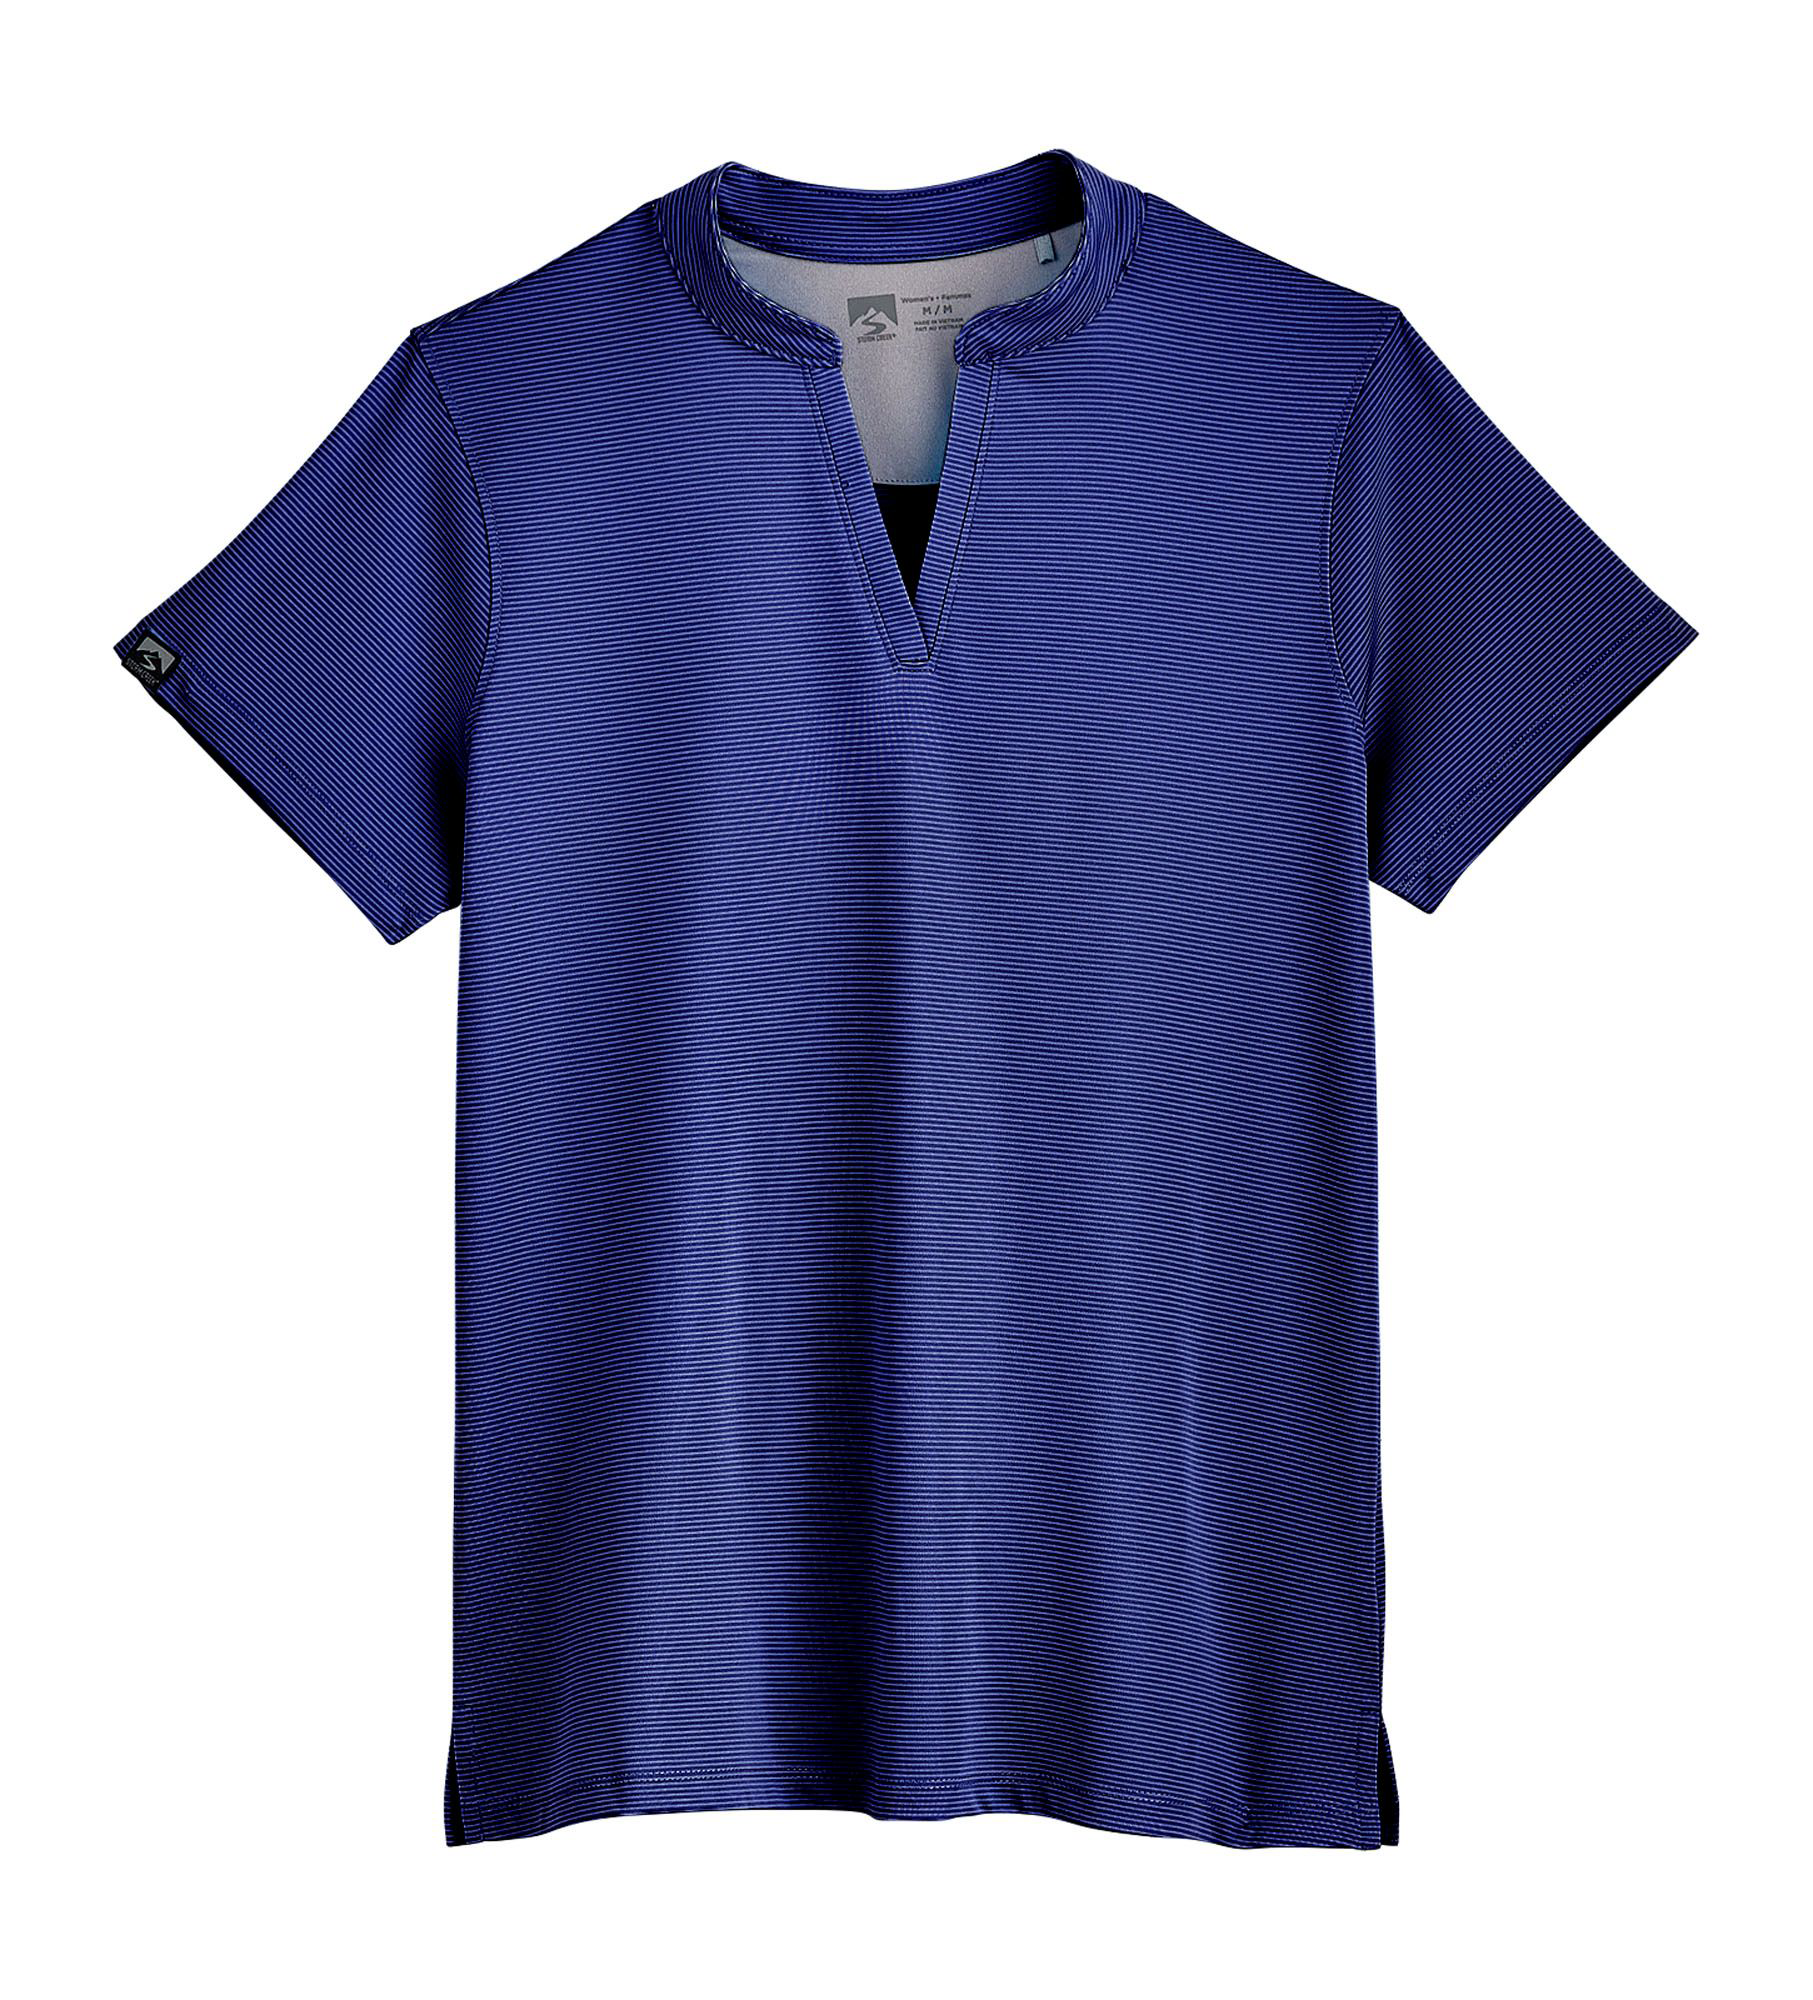 Storm Creek Optimist Short-Sleeve Polo Shirt for Ladies - Navy - S